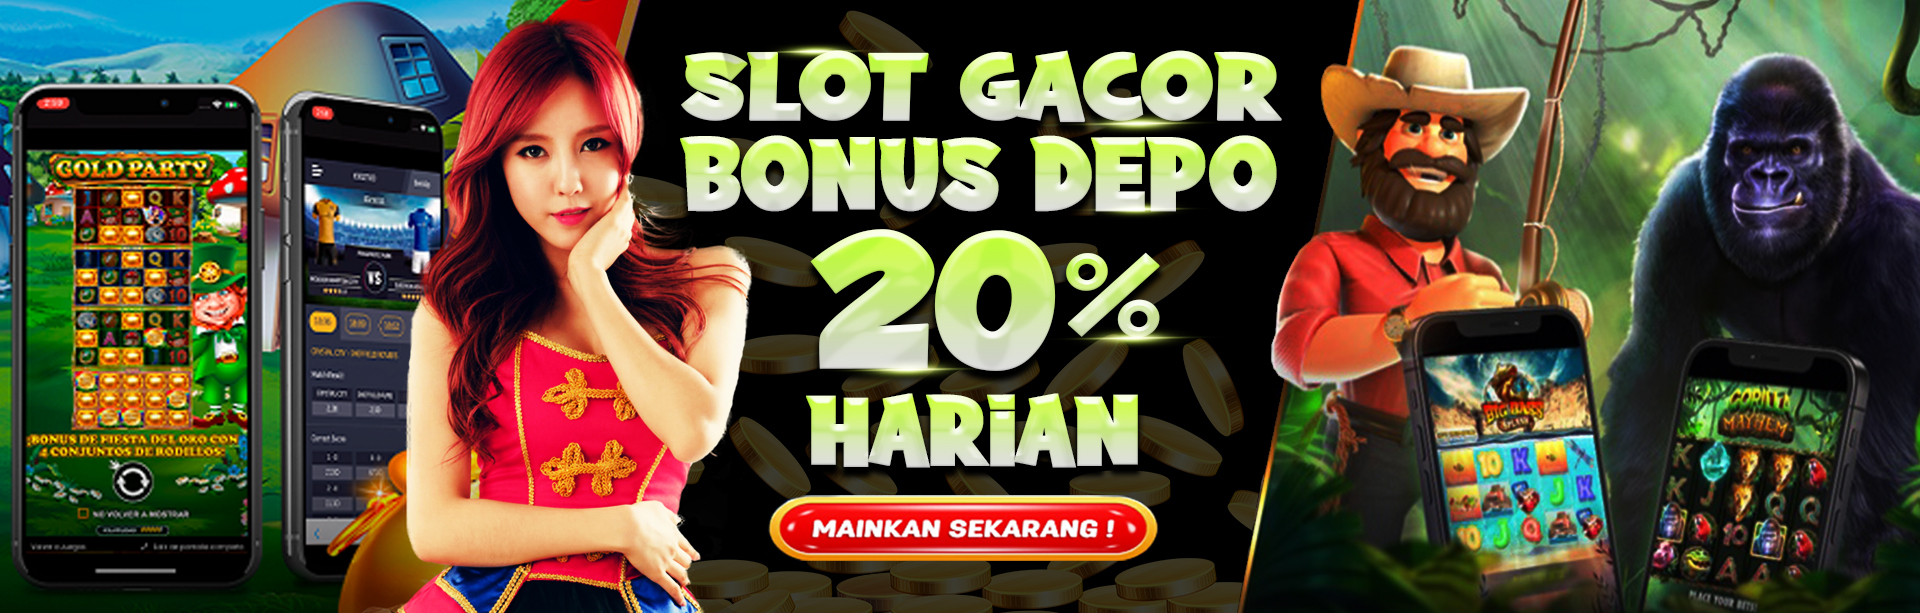 Bonus Depo Harian